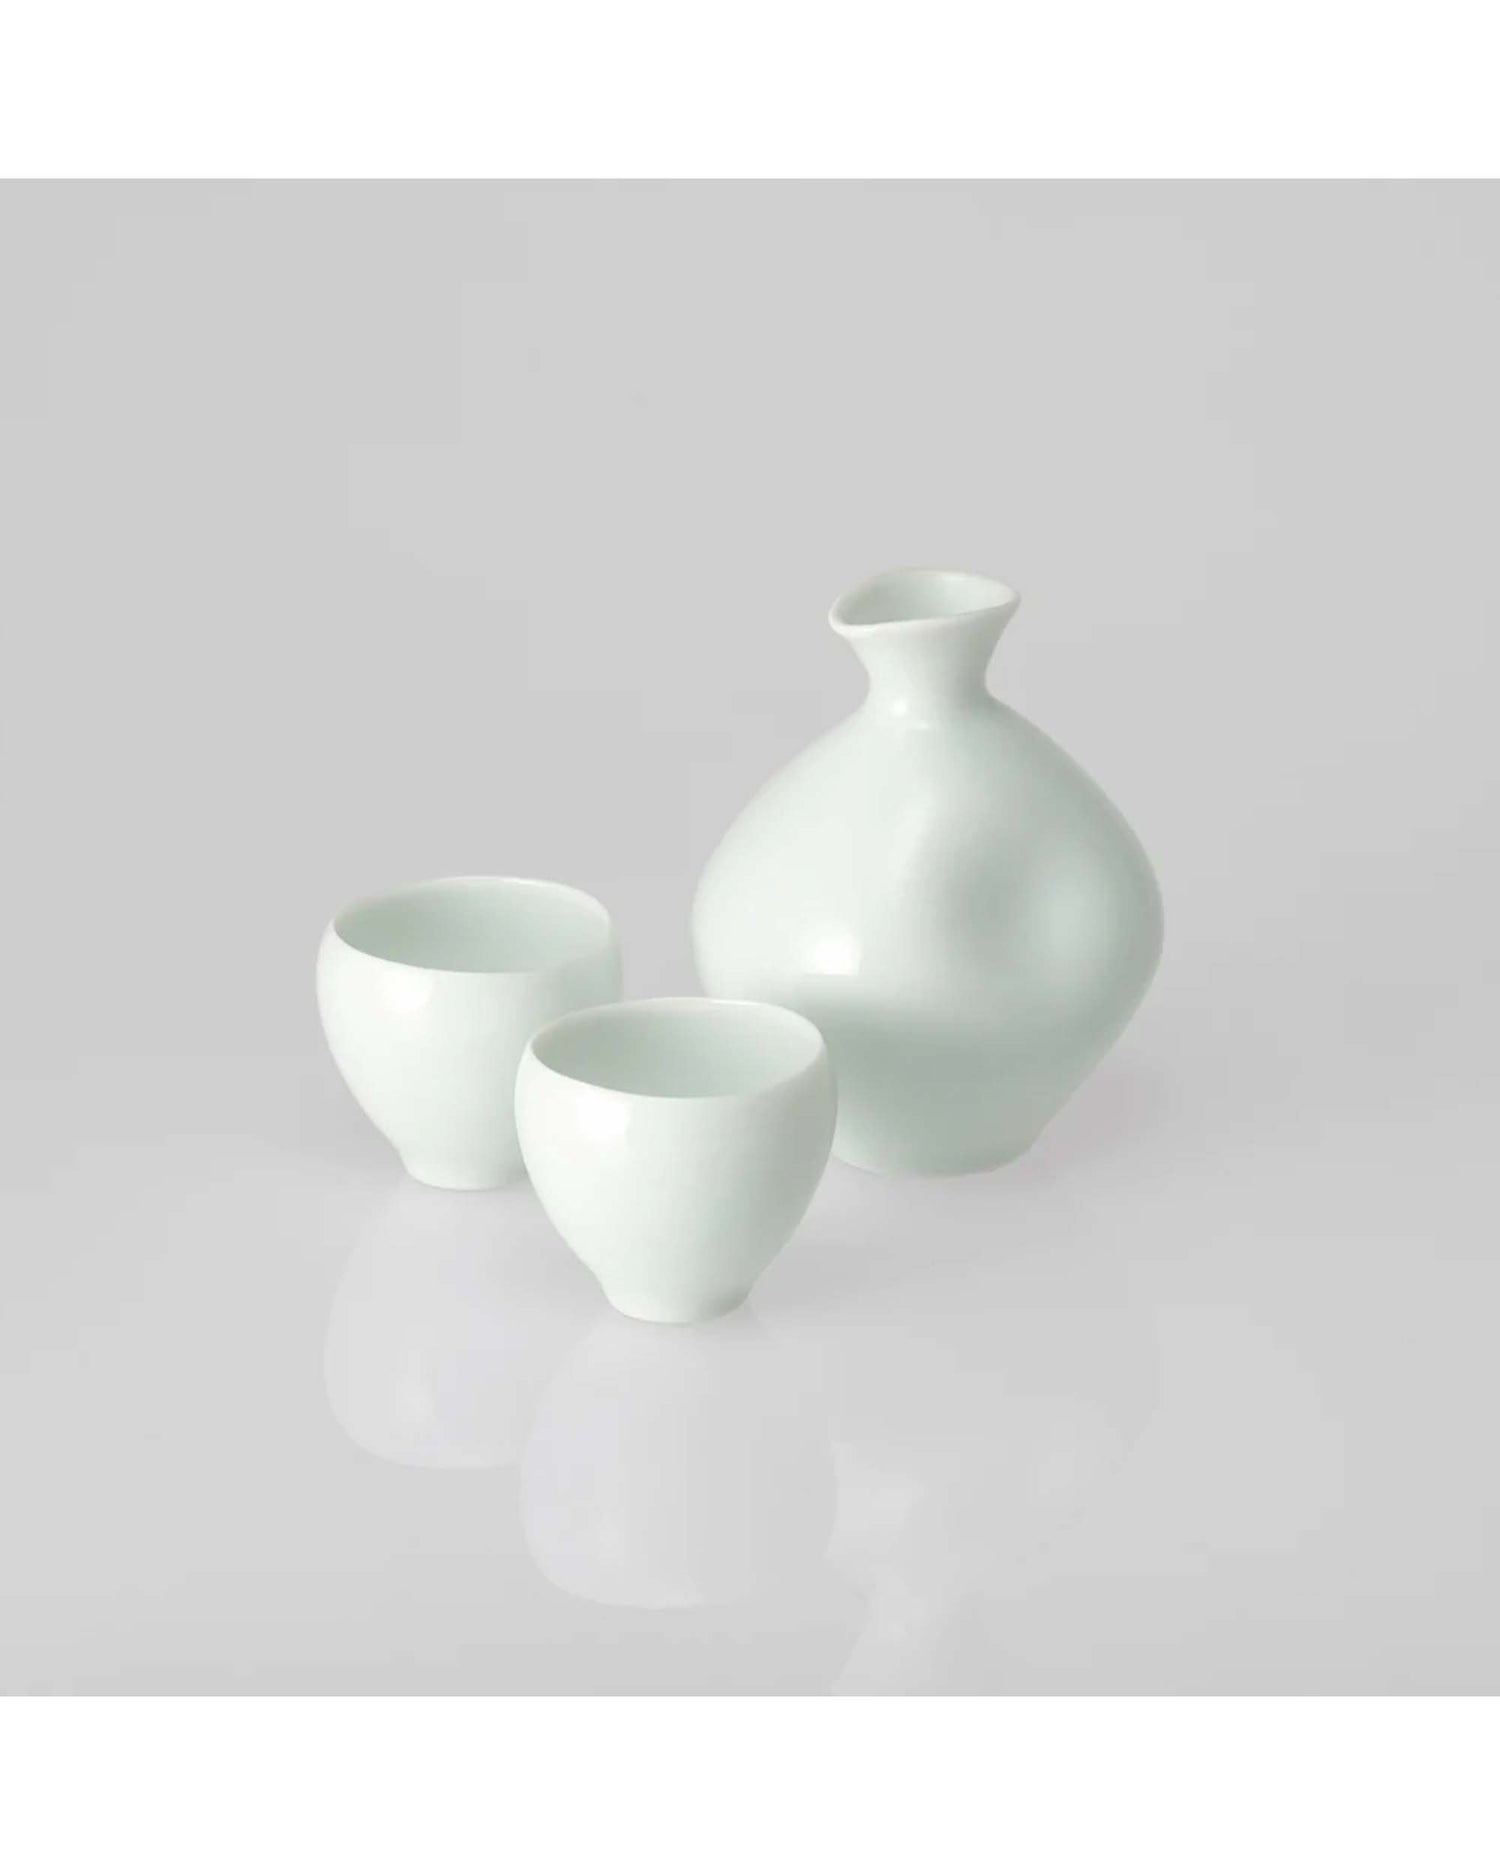 Sake-Bottle-Cups-Set